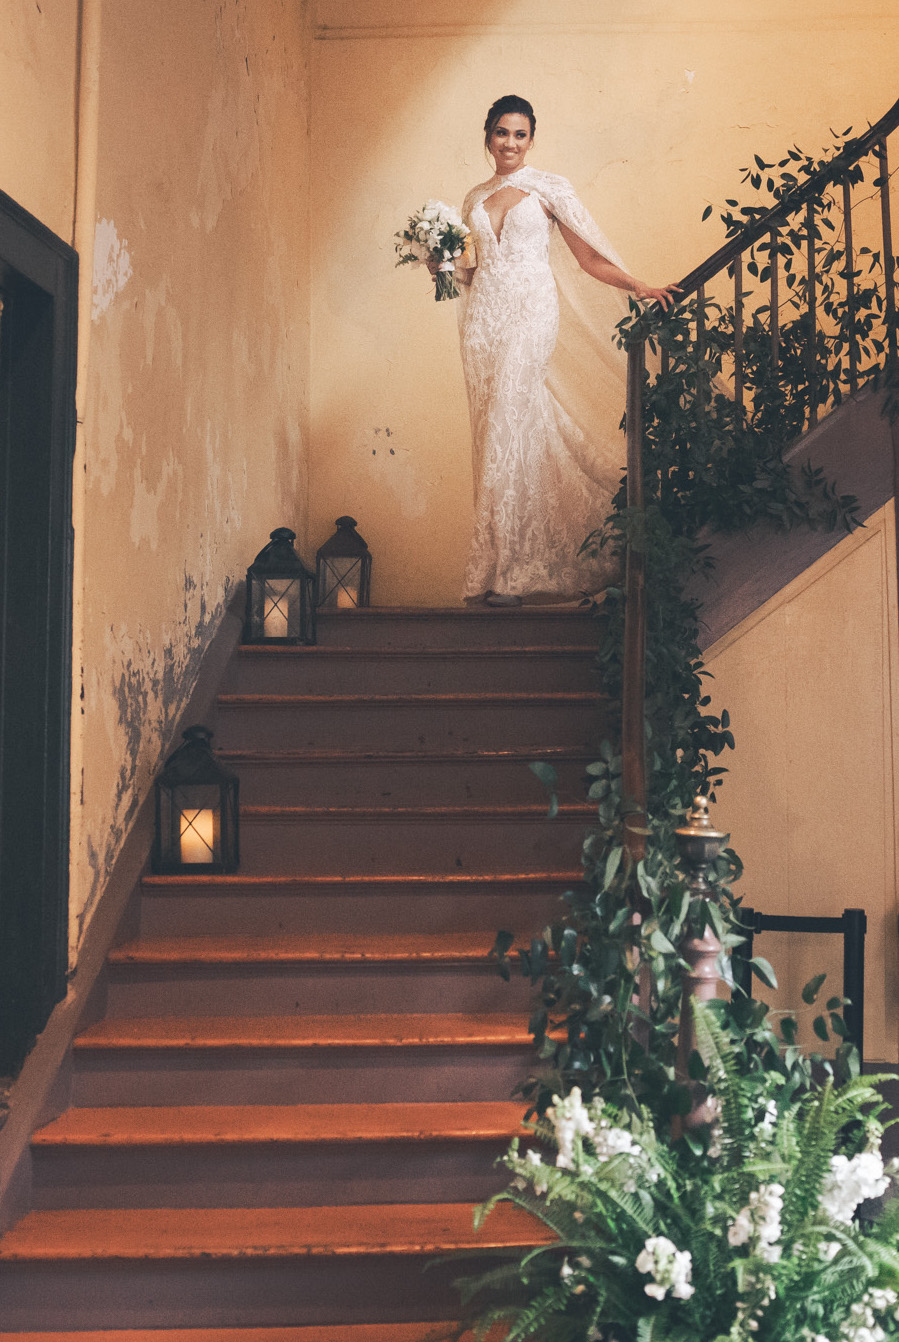 A bride walks down the stairs in her wedding dress for her NOLA destination wedding.